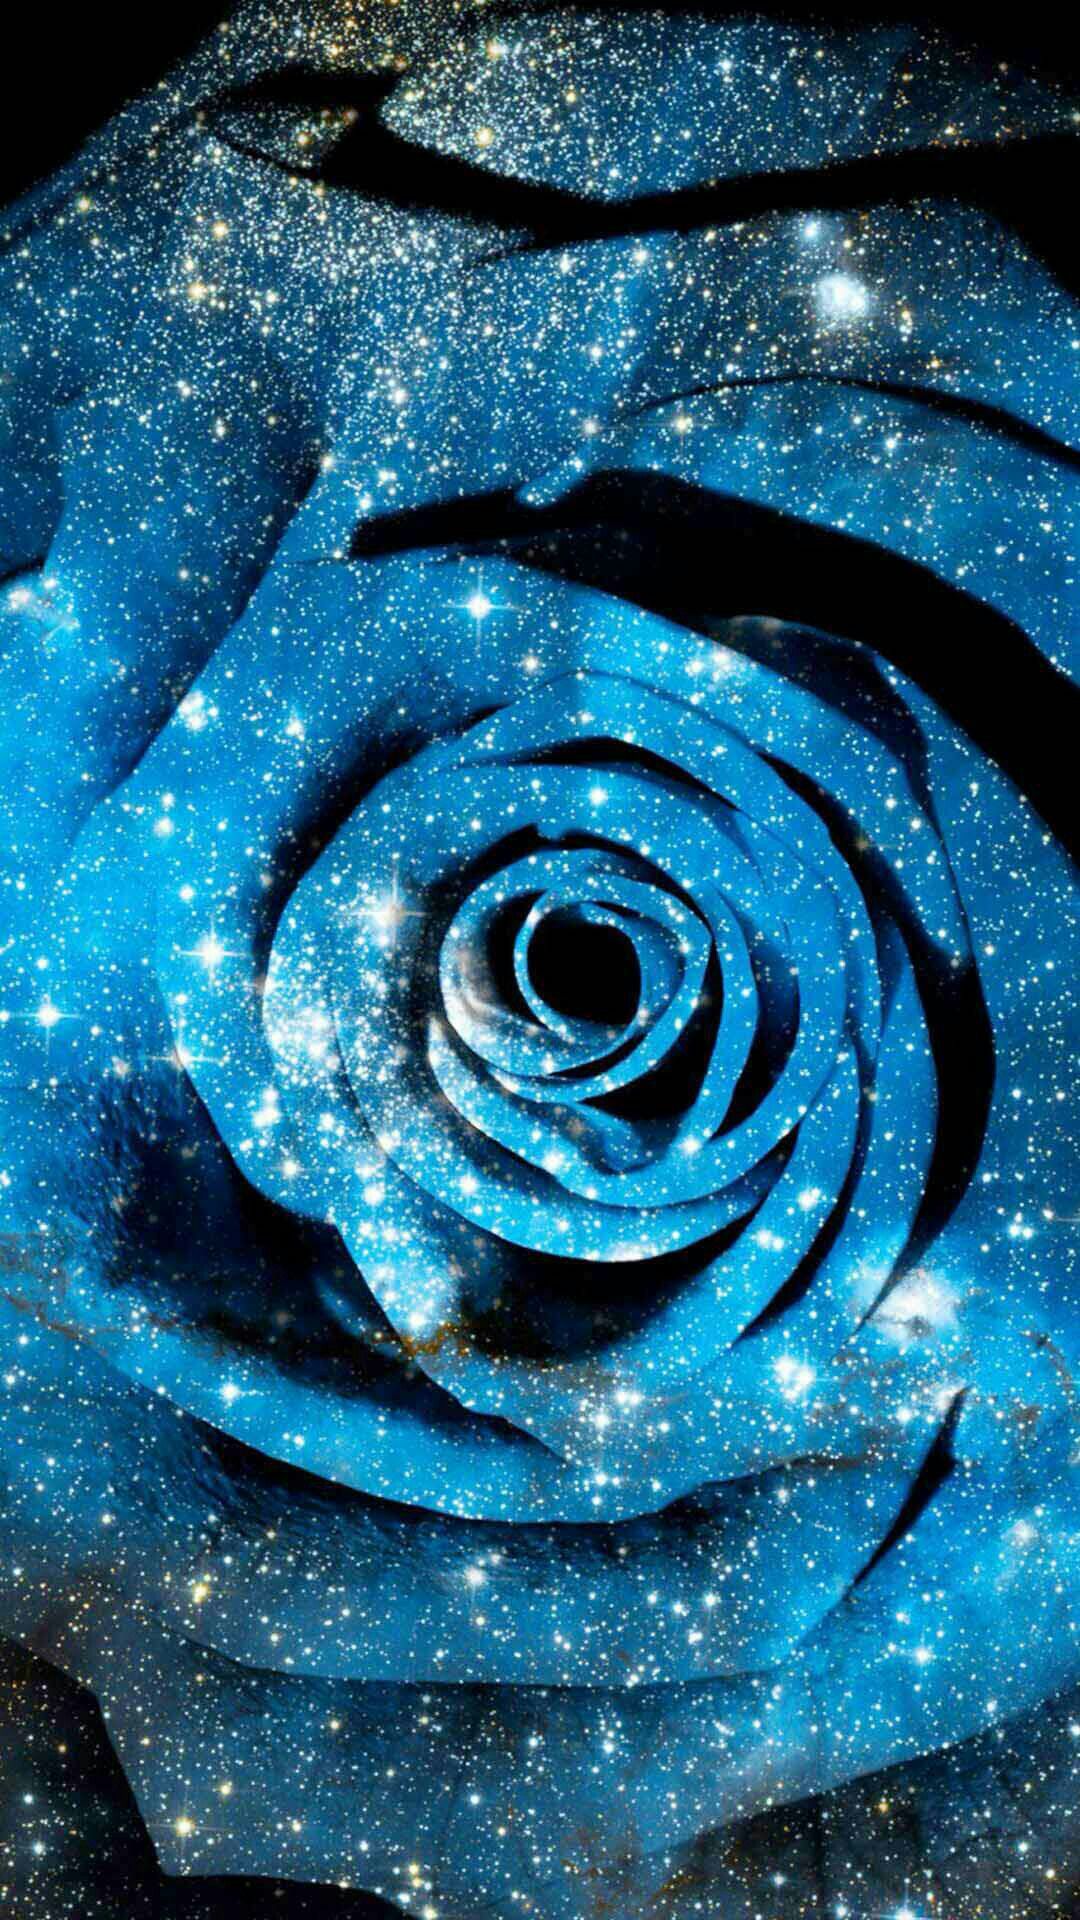 Pin by Indigo Sunshine on Celestial | Pinterest | Blue roses